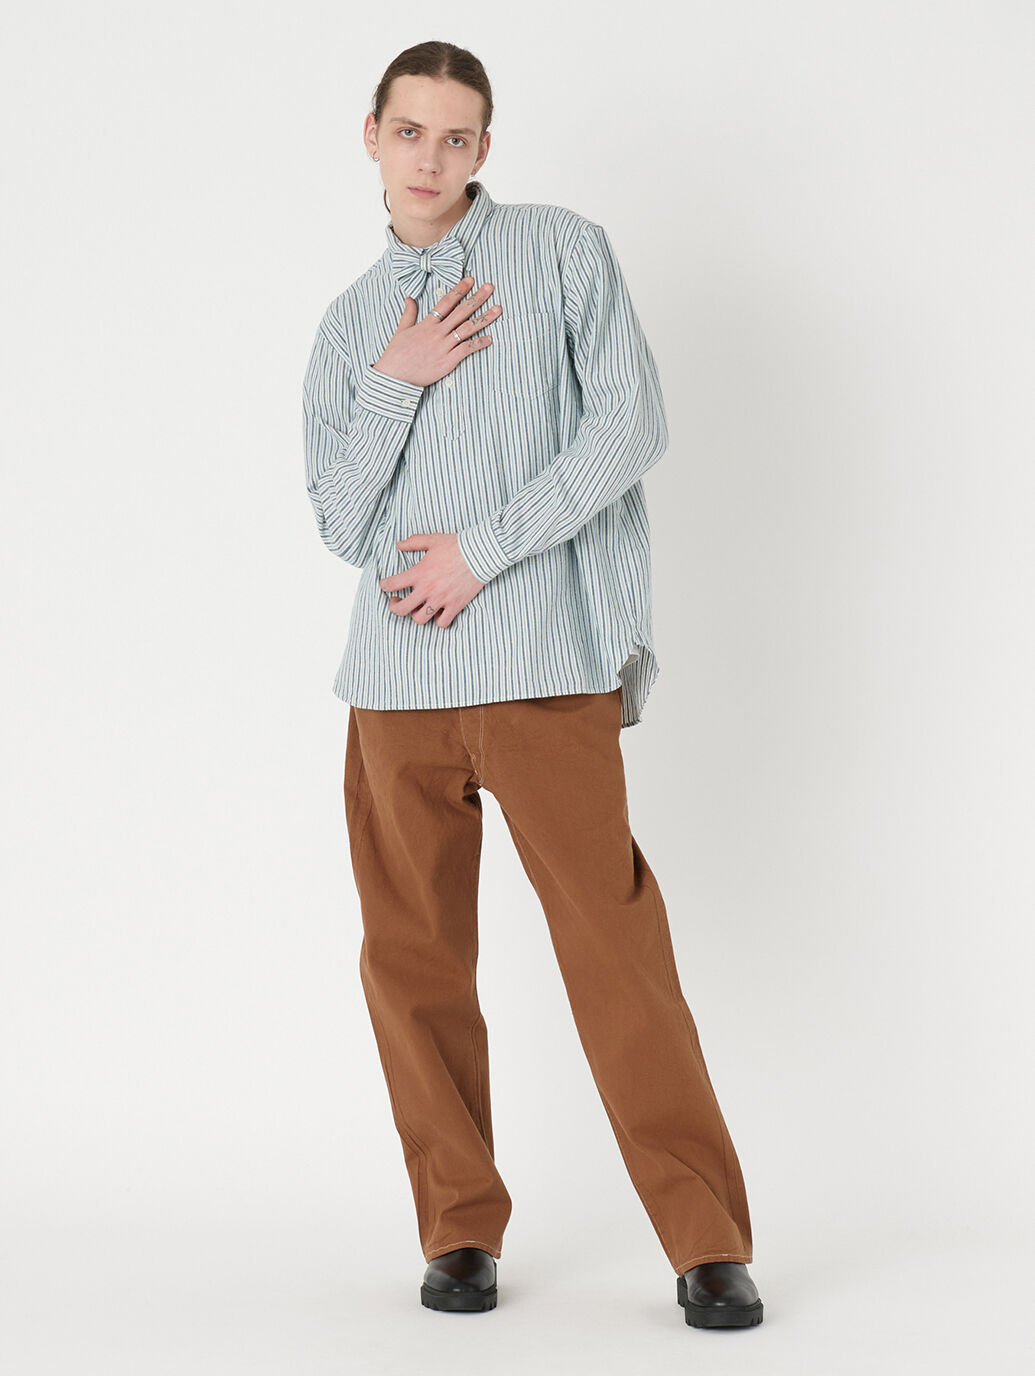 LEVI'S® VINTAGE CLOTHING ポップオーバー サンセットシャツ CLASSIC